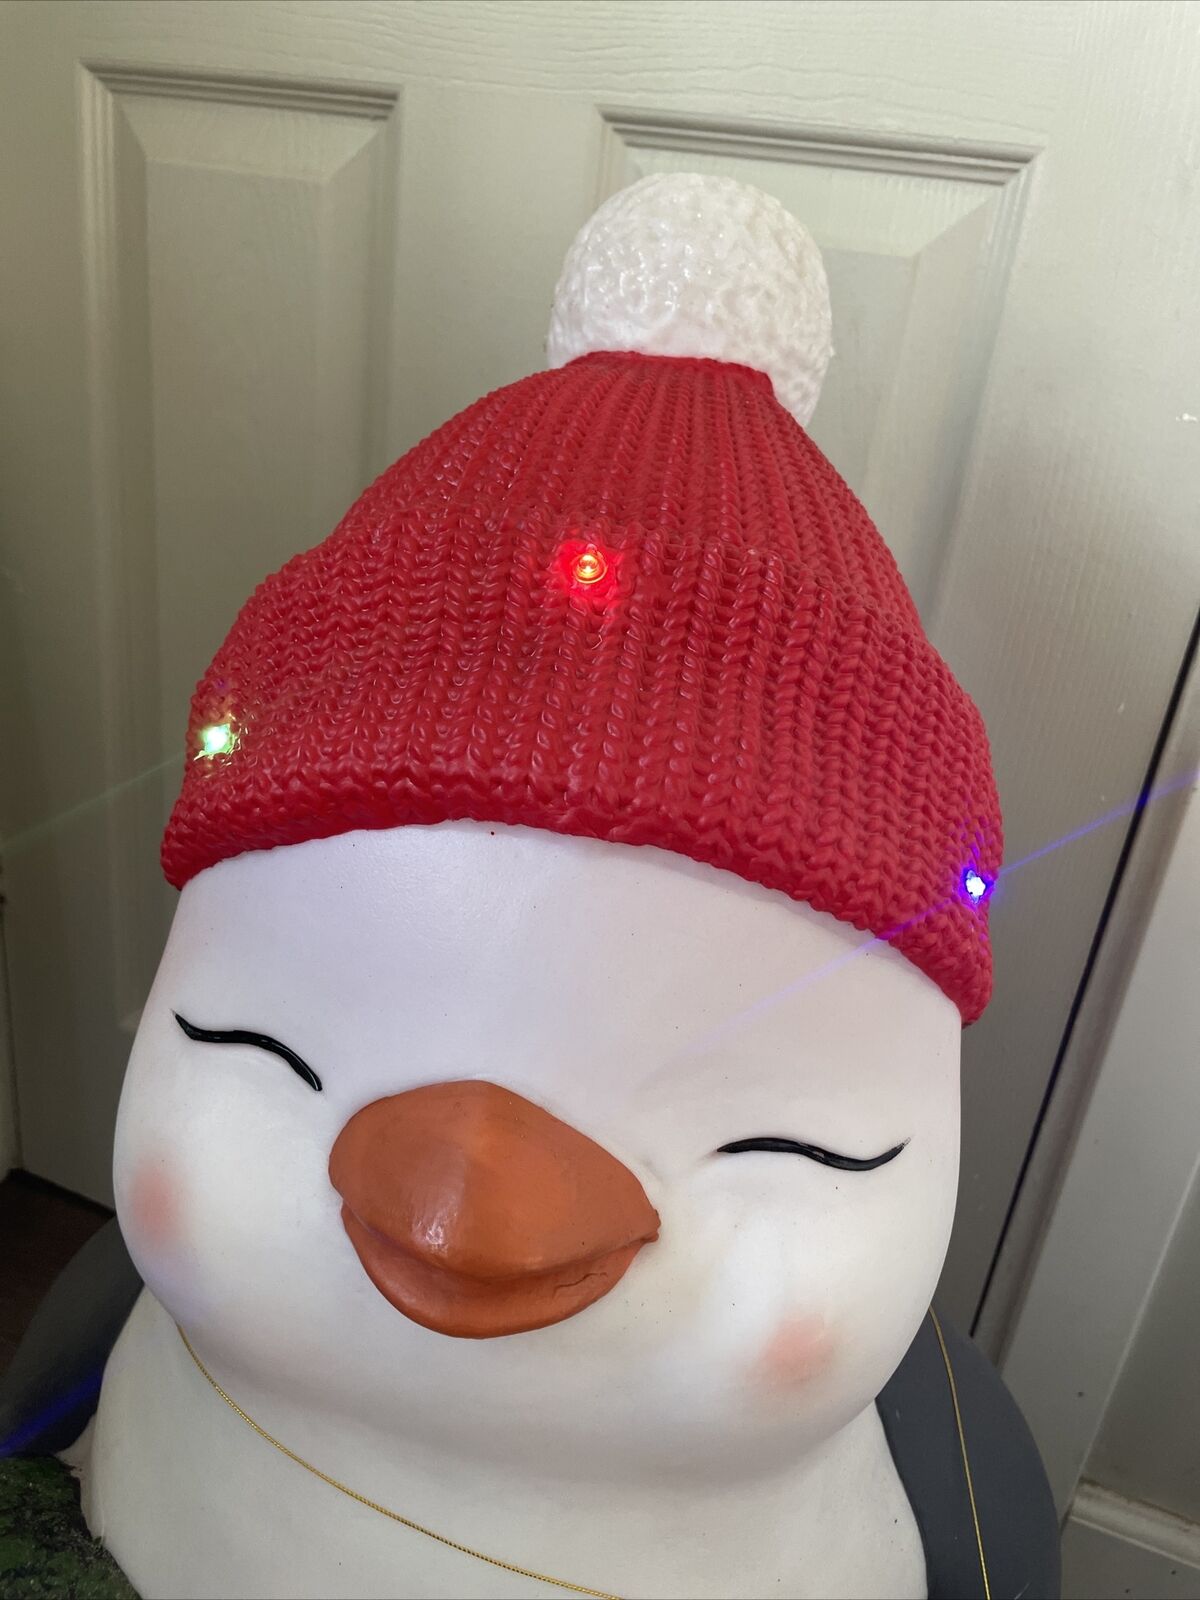 Home Depot Christmas 2022 2.5 ft blissful figures LED Penguin Blow Mold - $115